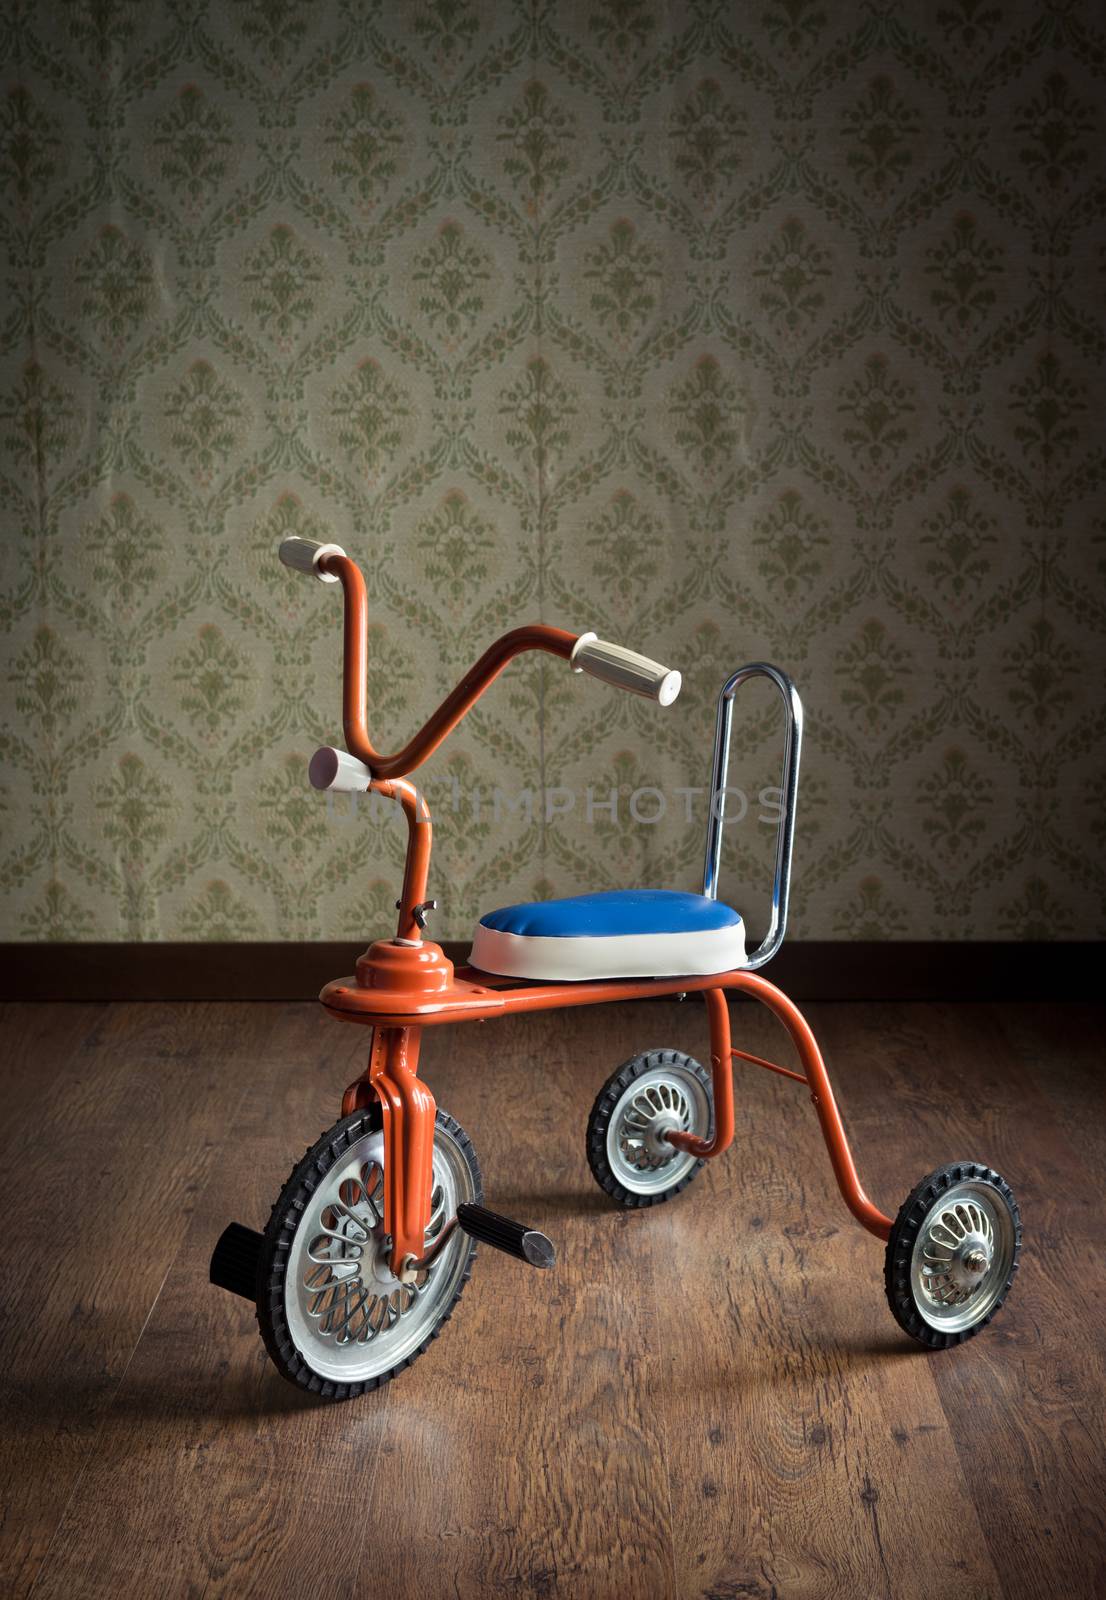 Vintage orange tricycle on hardwood floor and vintage wallpaper on background.